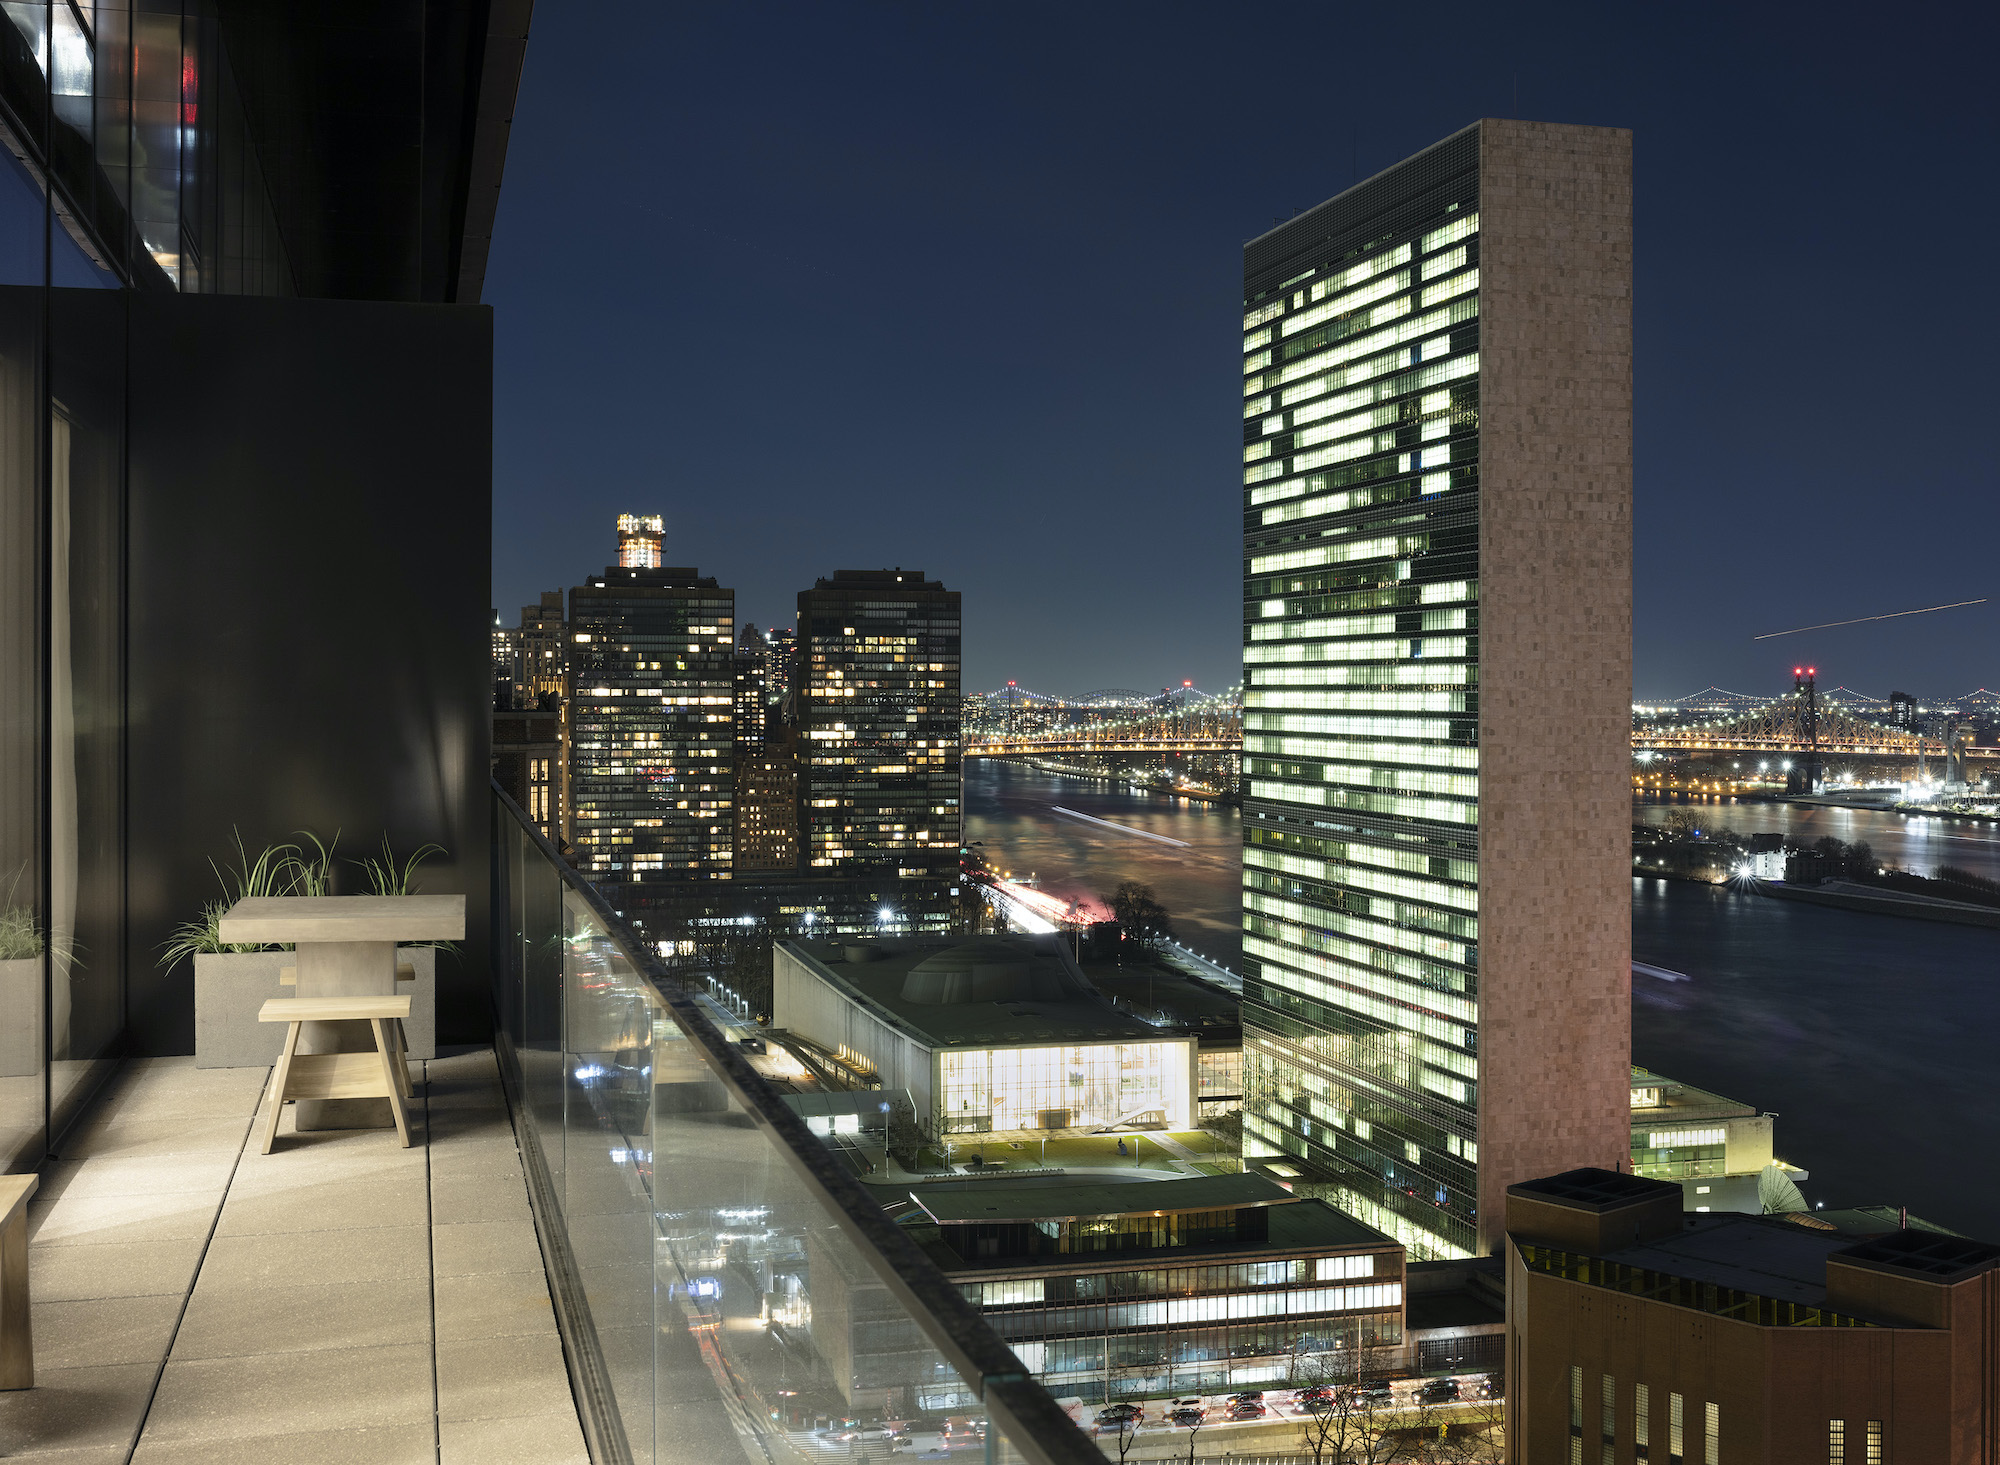 This $8M penthouse near the UN has some killer views